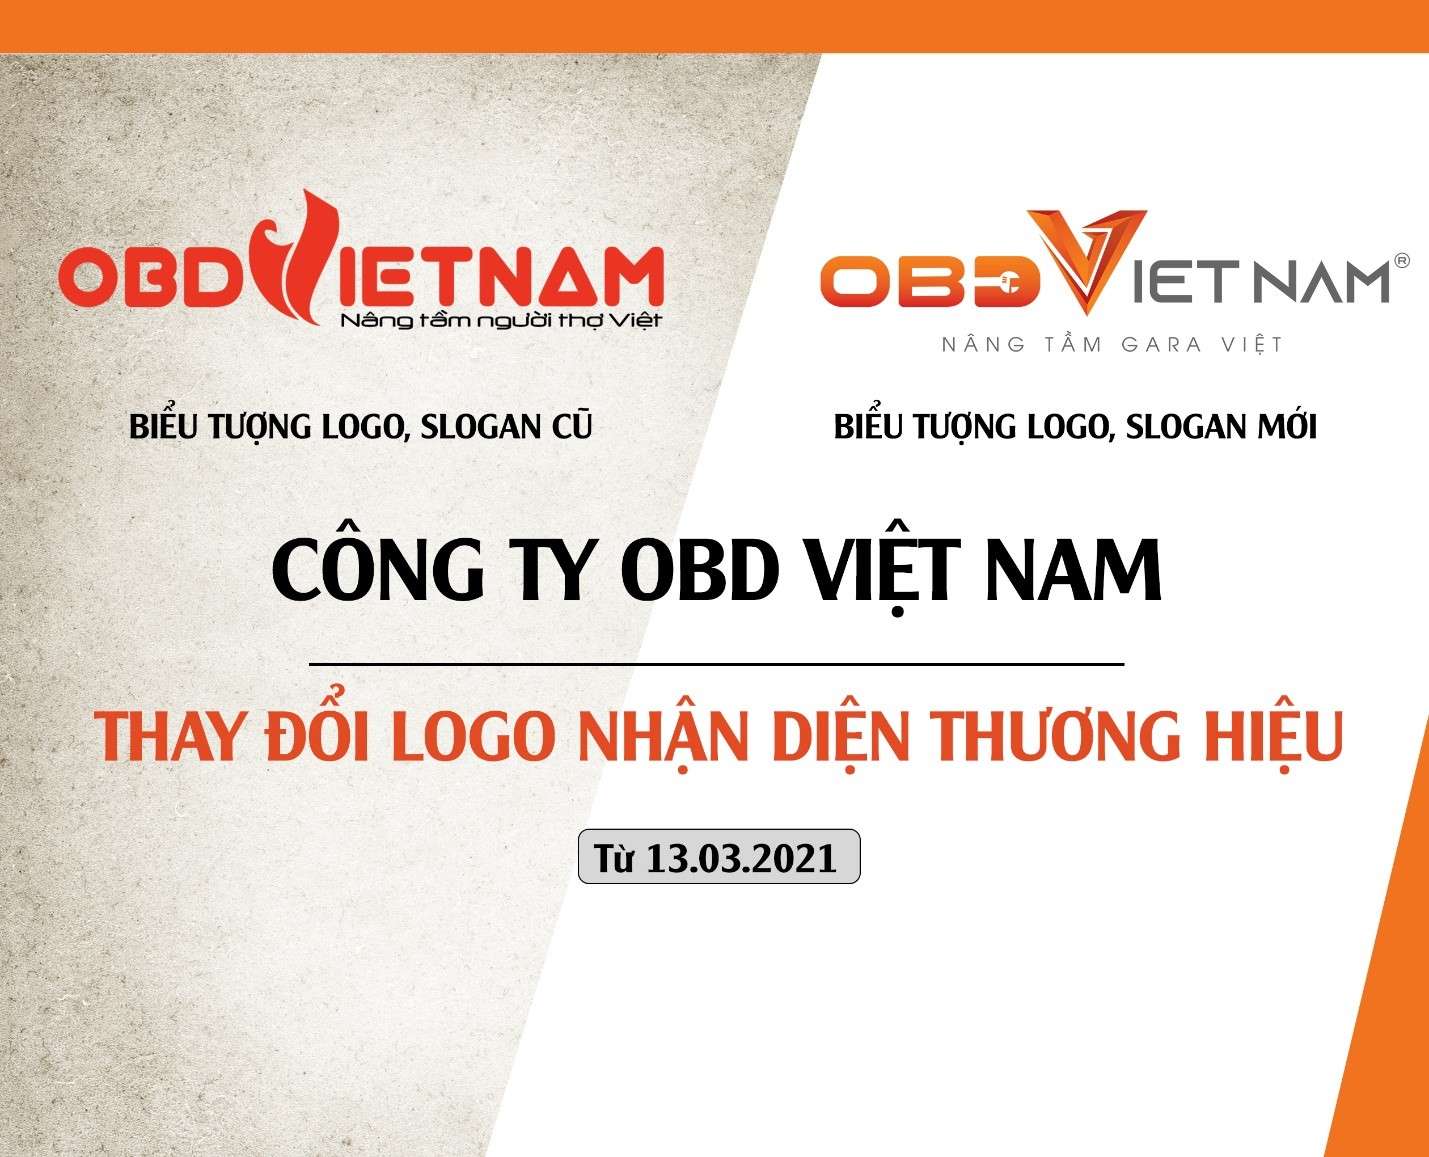 obd-viet-nam-thay-doi-logo-nhan-dien-thuong-hieu-obdvietnam